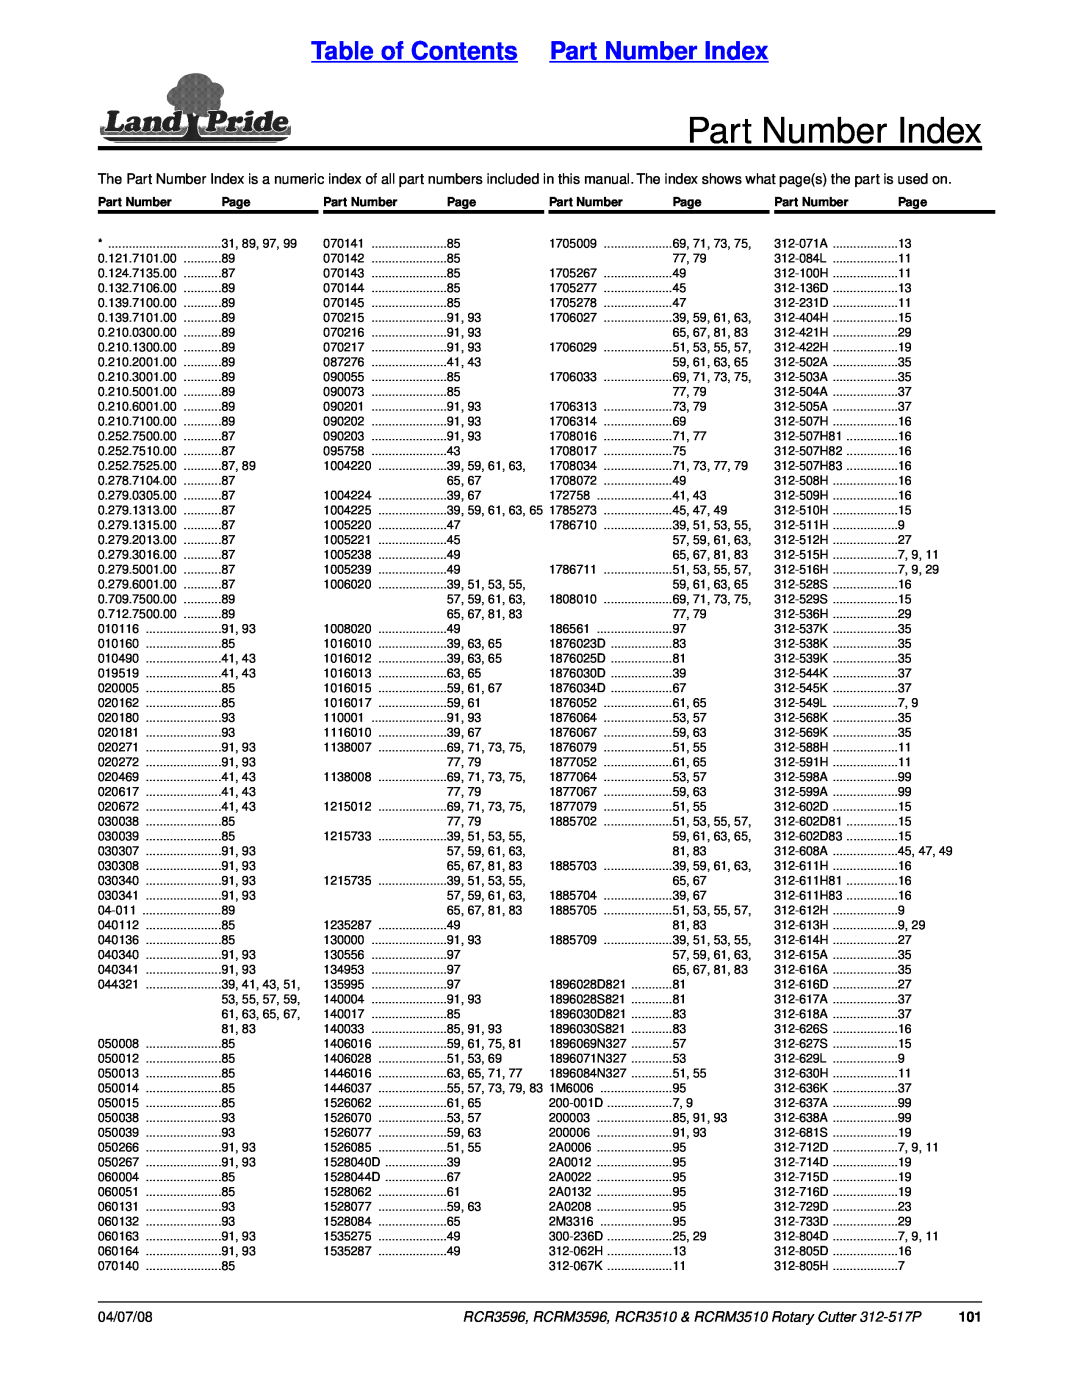 Land Pride RCRM3510, RCR3510, RCRM3596, RCR3596 manual Table of Contents Part Number Index, Page, 04/07/08 